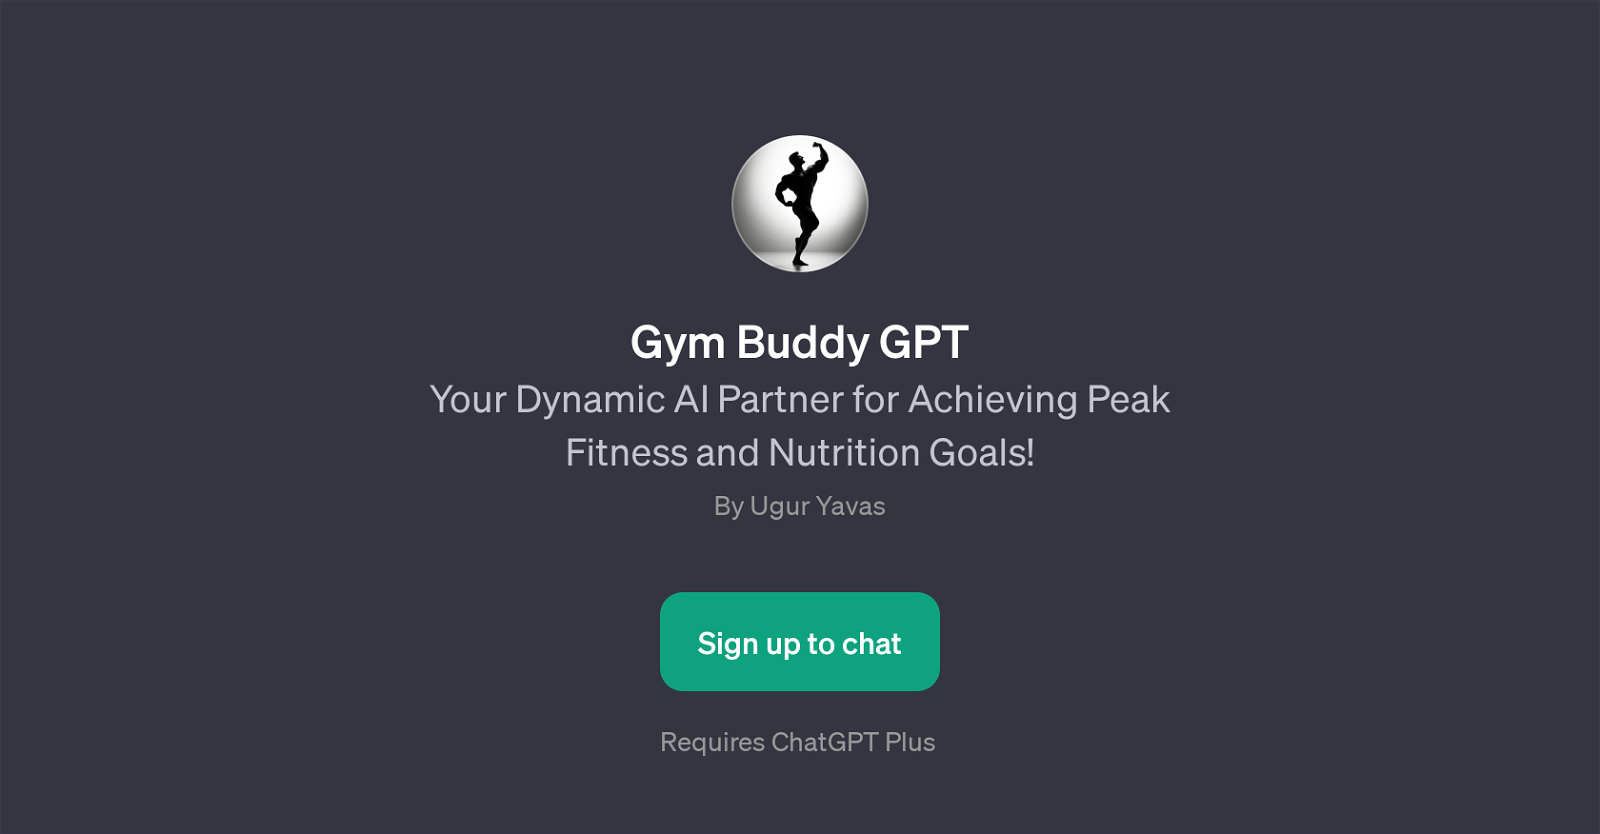 Gym Buddy GPT website